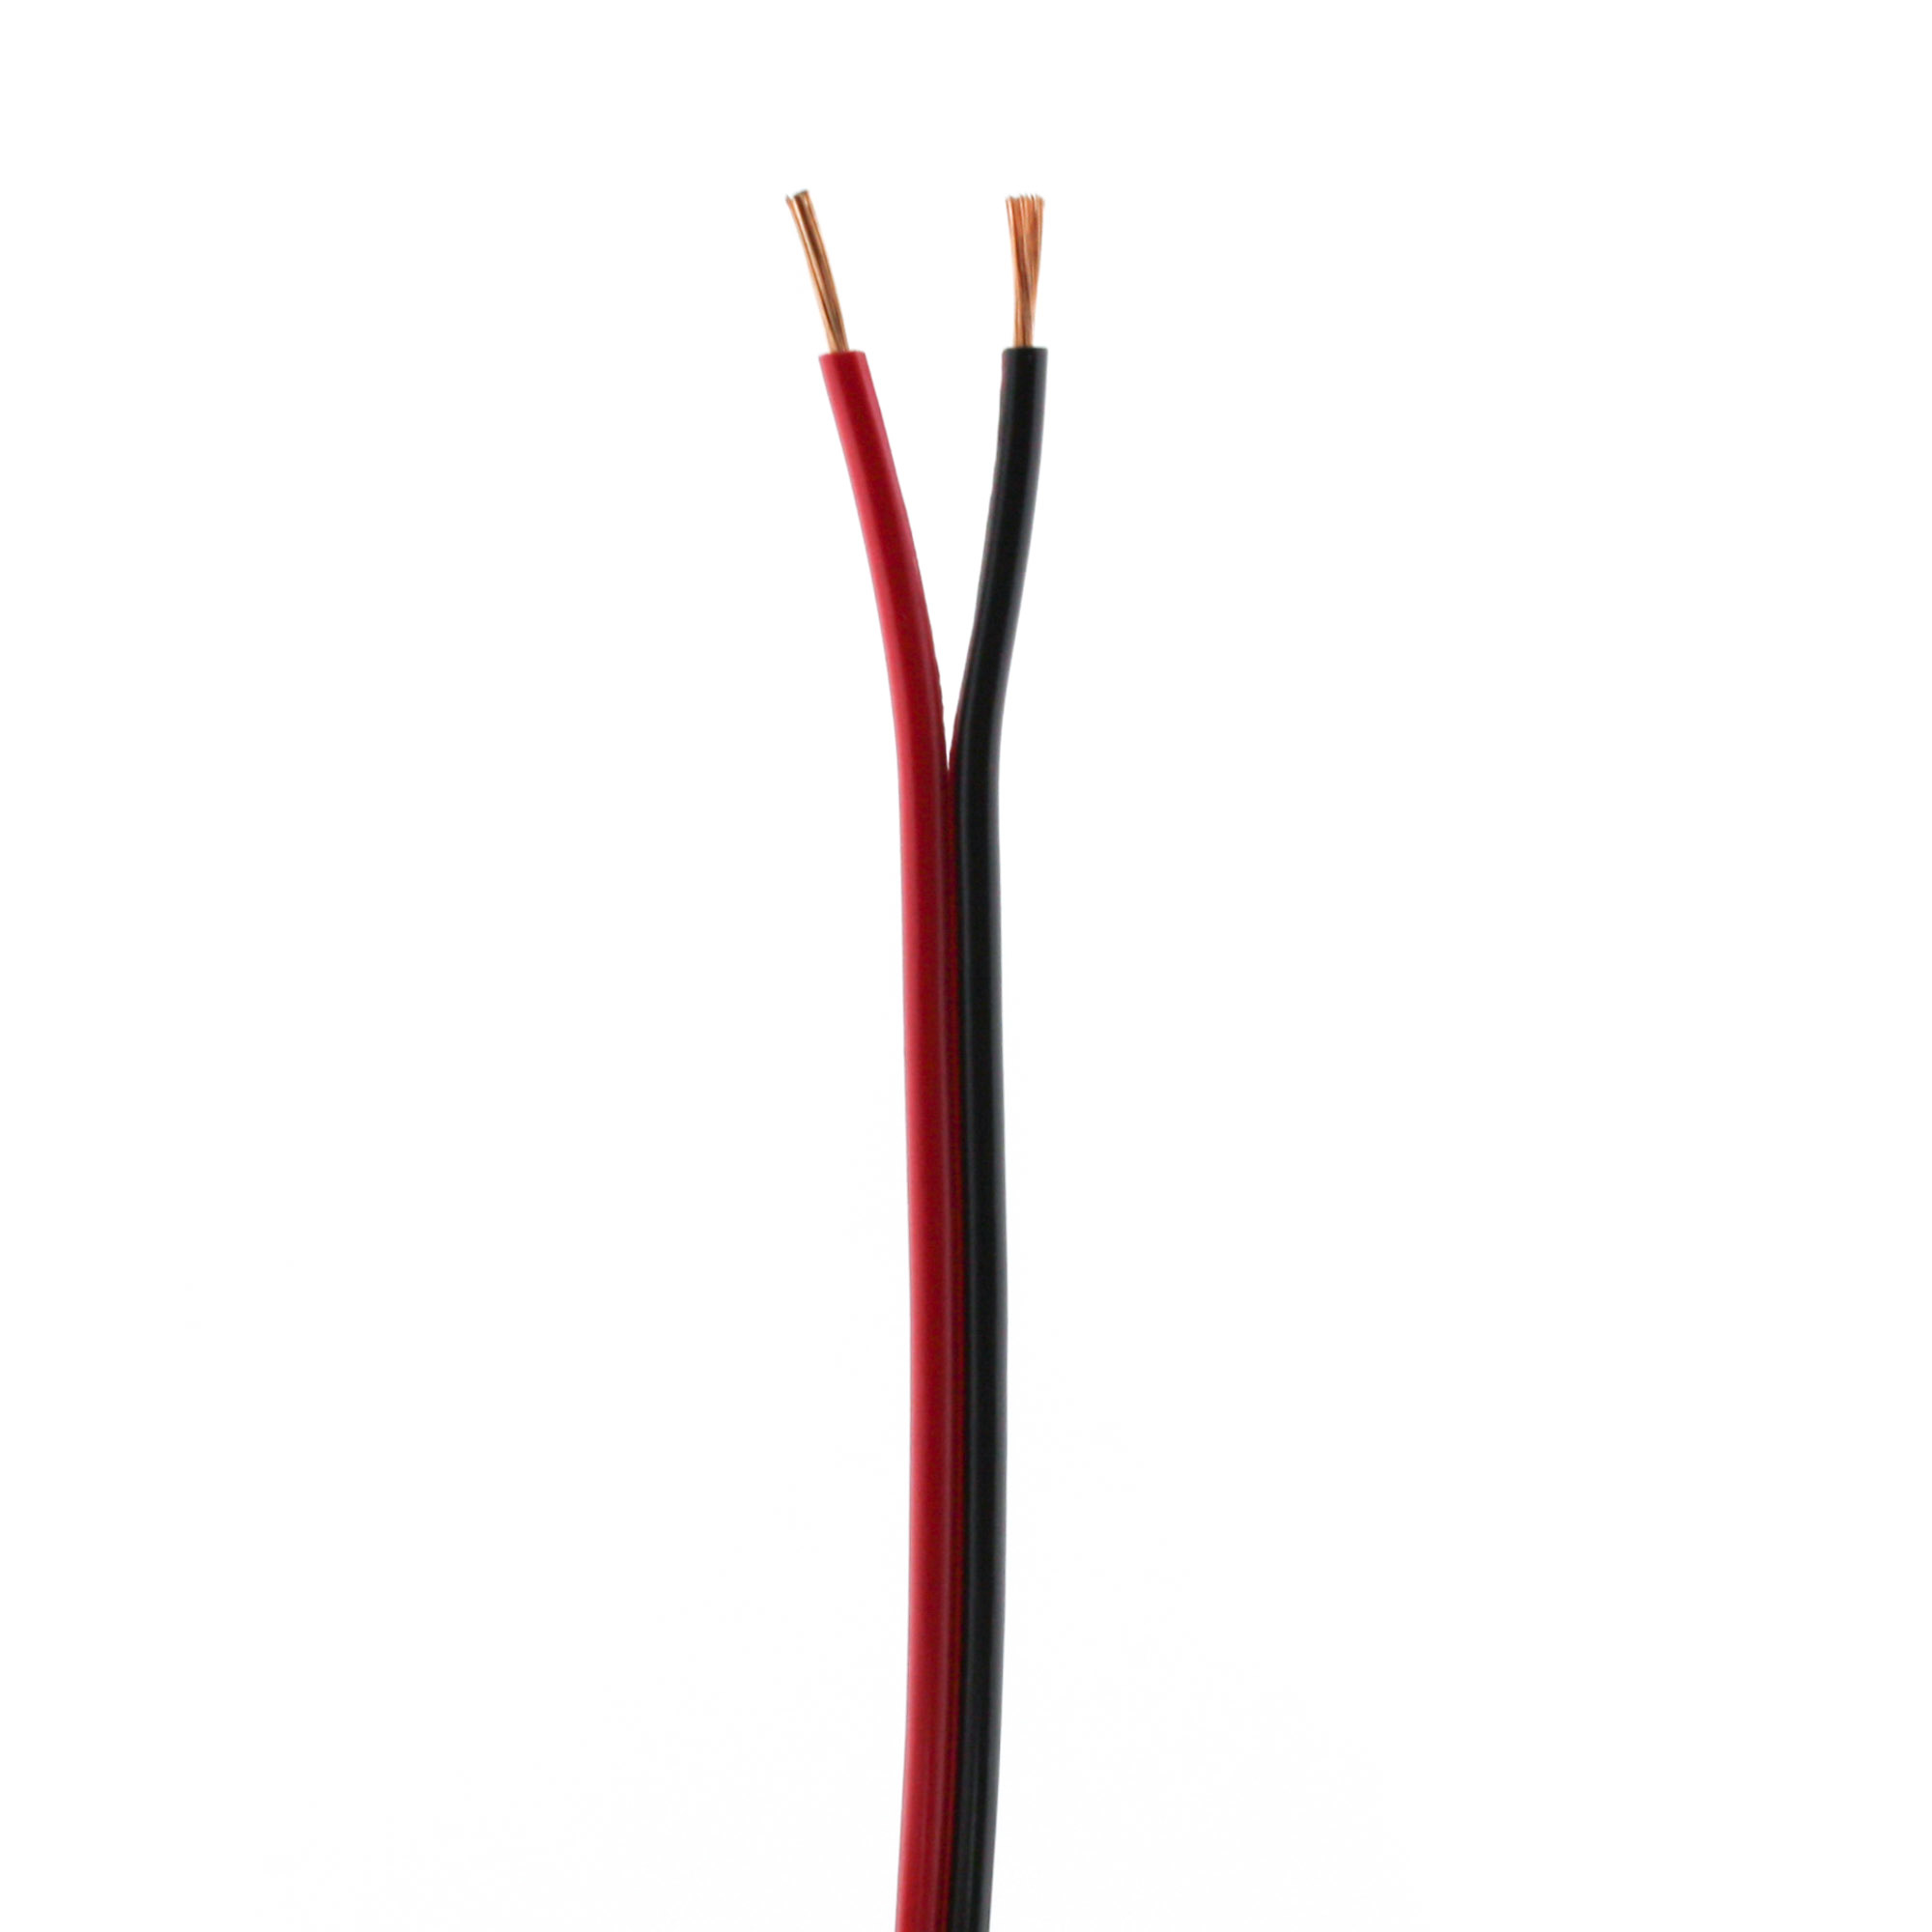 Loudspeaker cable red/black 25m 0.50mm